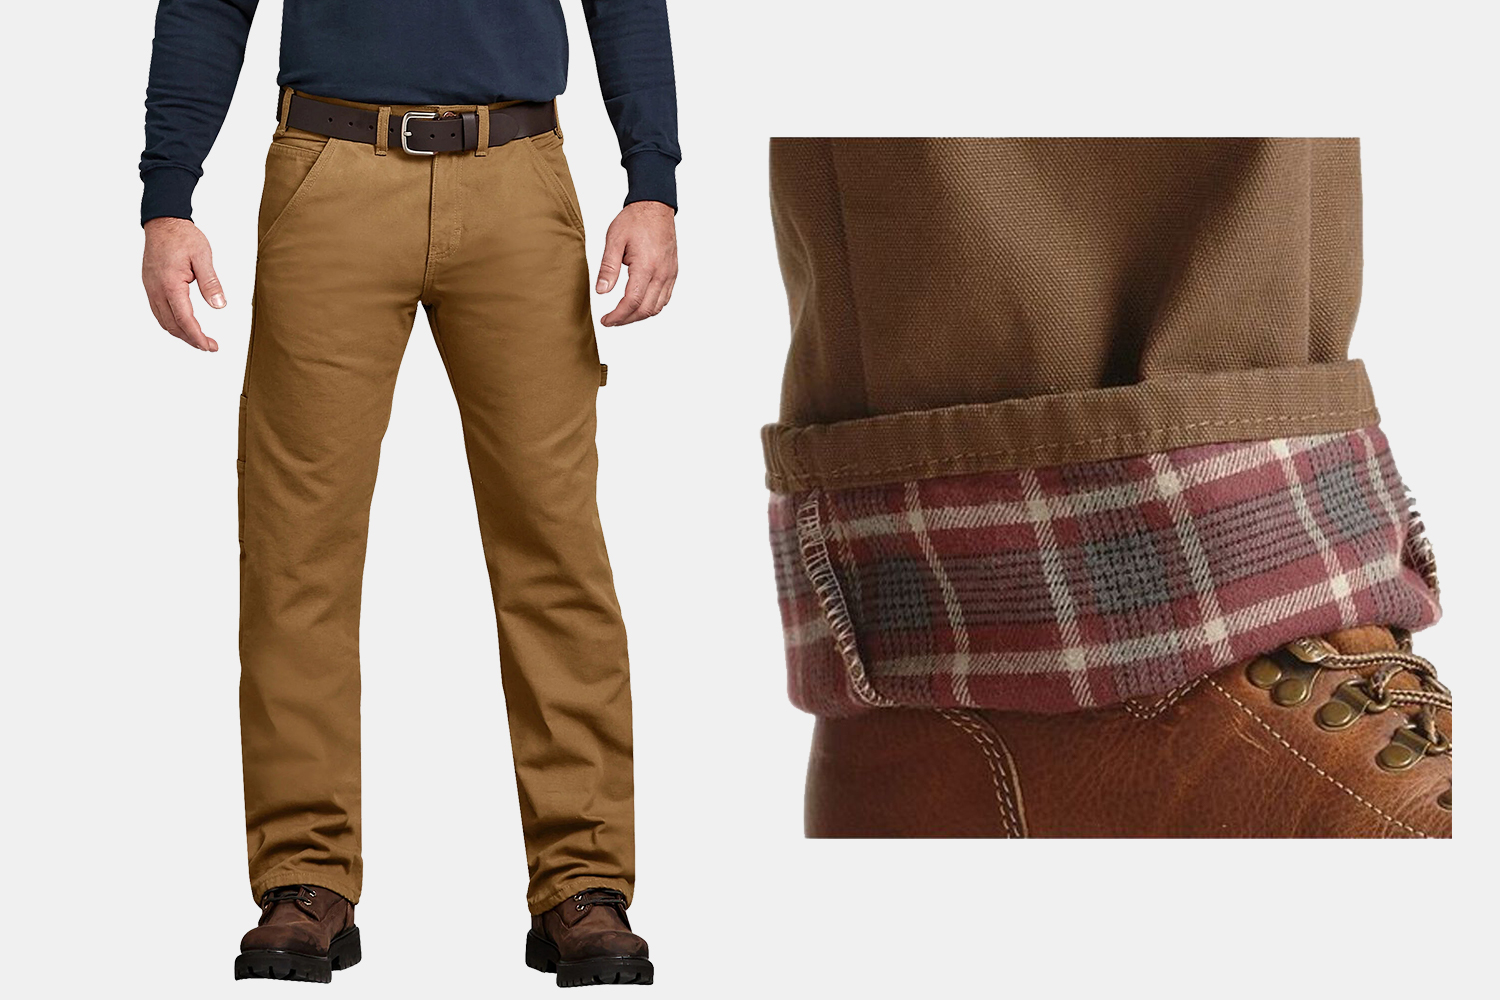 Wrangler Fleece Lined Pants Discount Factory, Save 60% | jlcatj.gob.mx